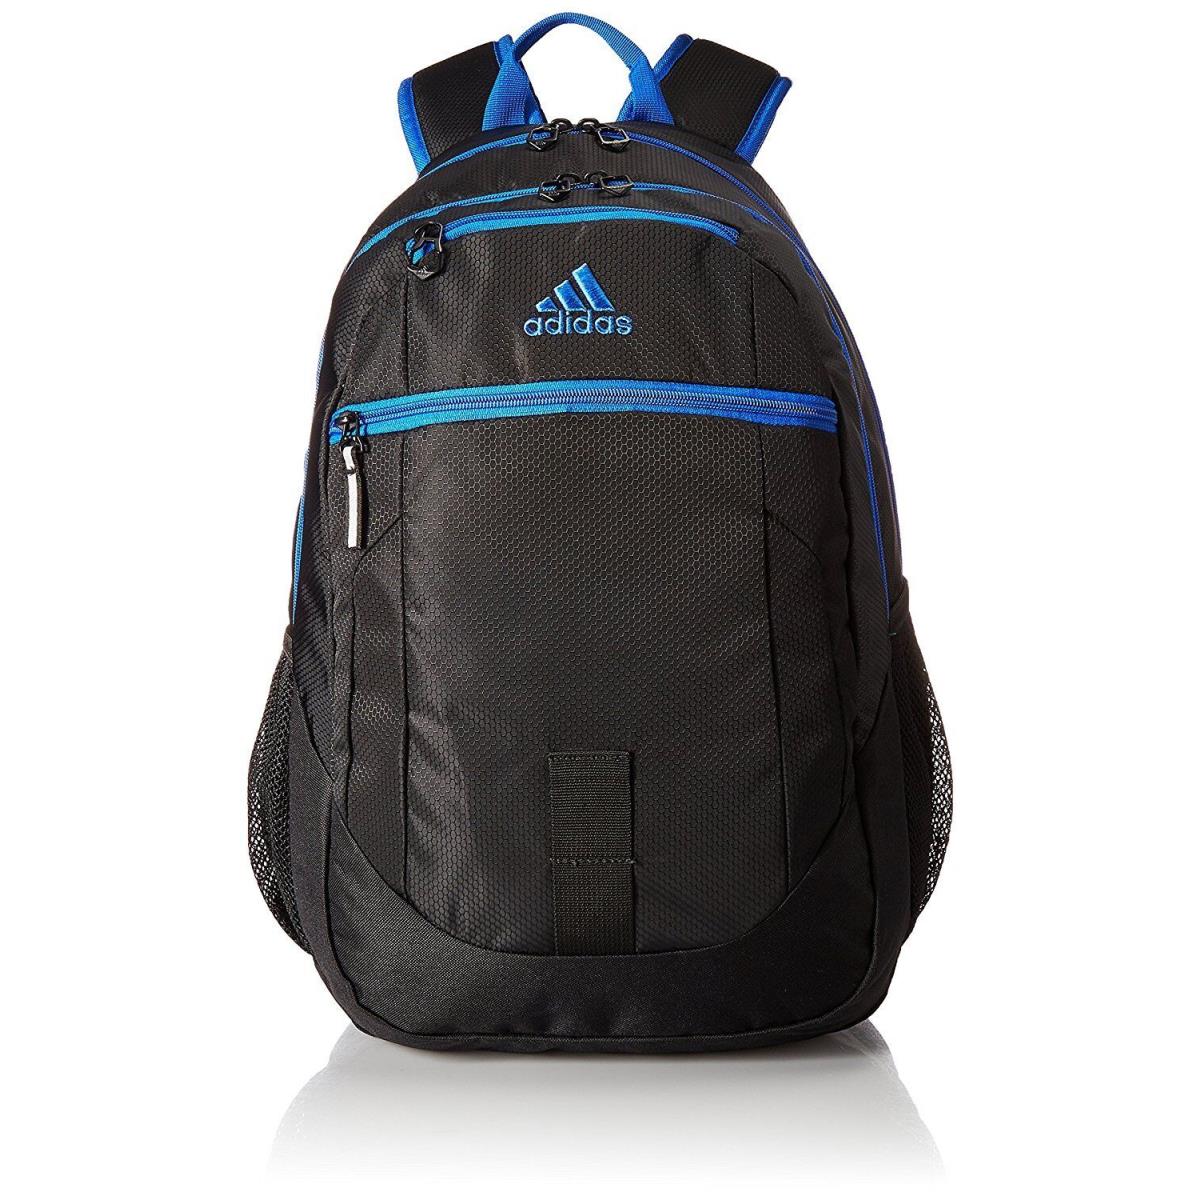 Adidas Foundation Iii Backpack 5143876 Night Grey/scarlet or 5143132 Black/blue Black/Blue (5143132)